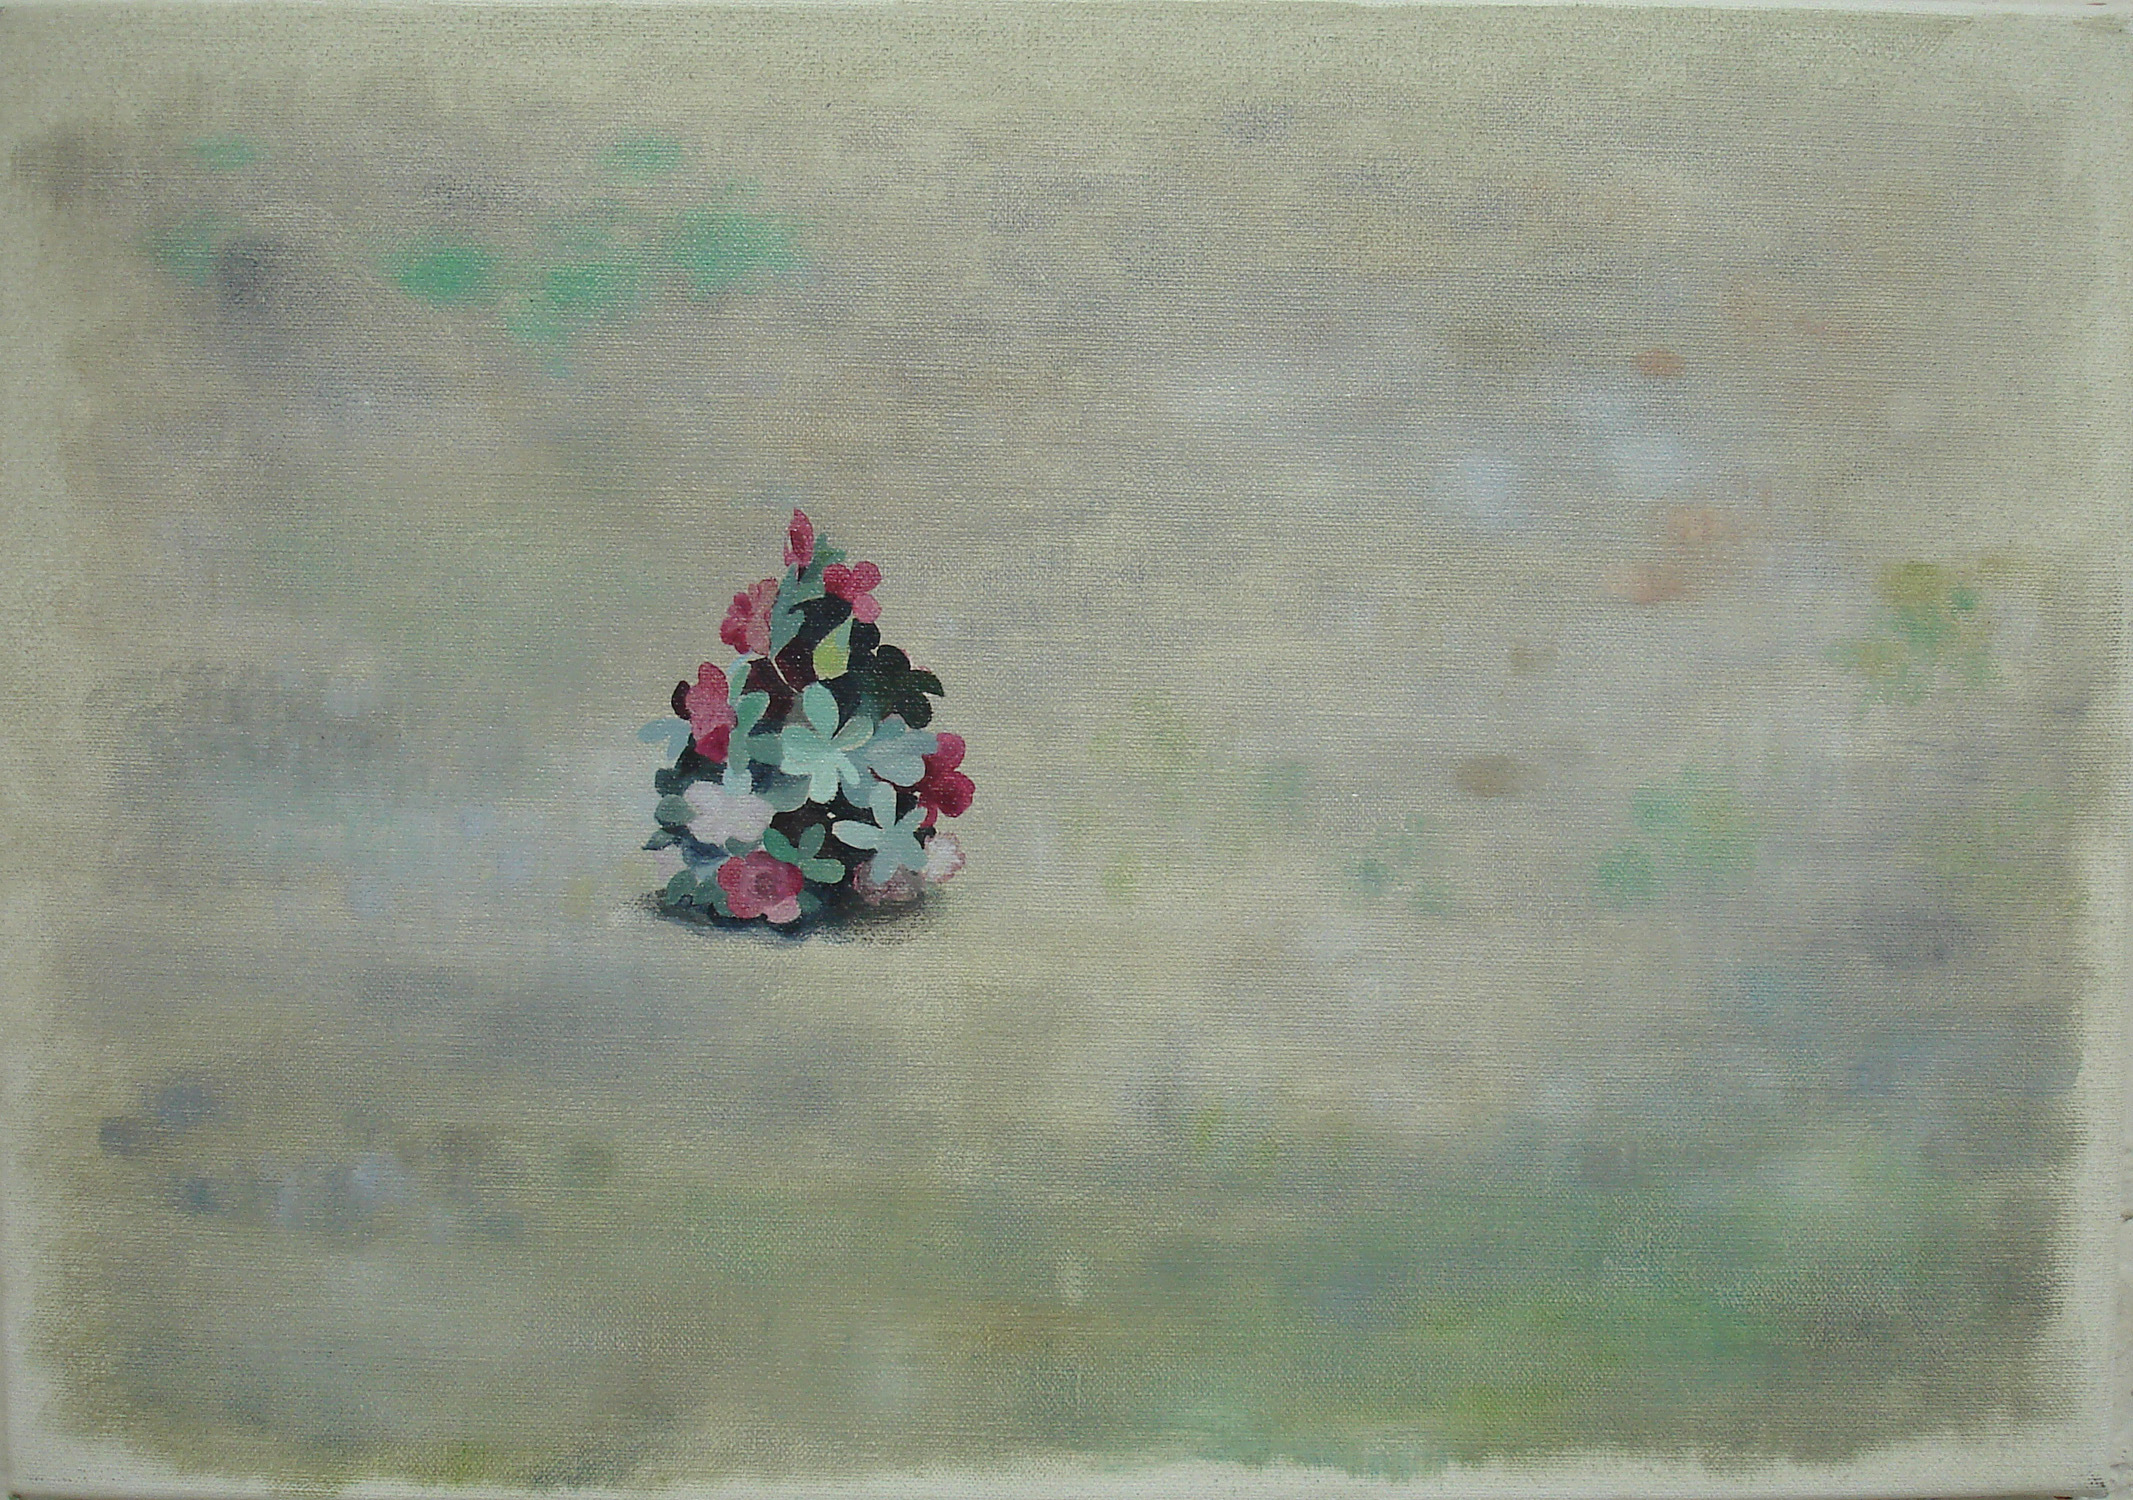   False Plant    2008, oil on canvas, 36 x 50cm  